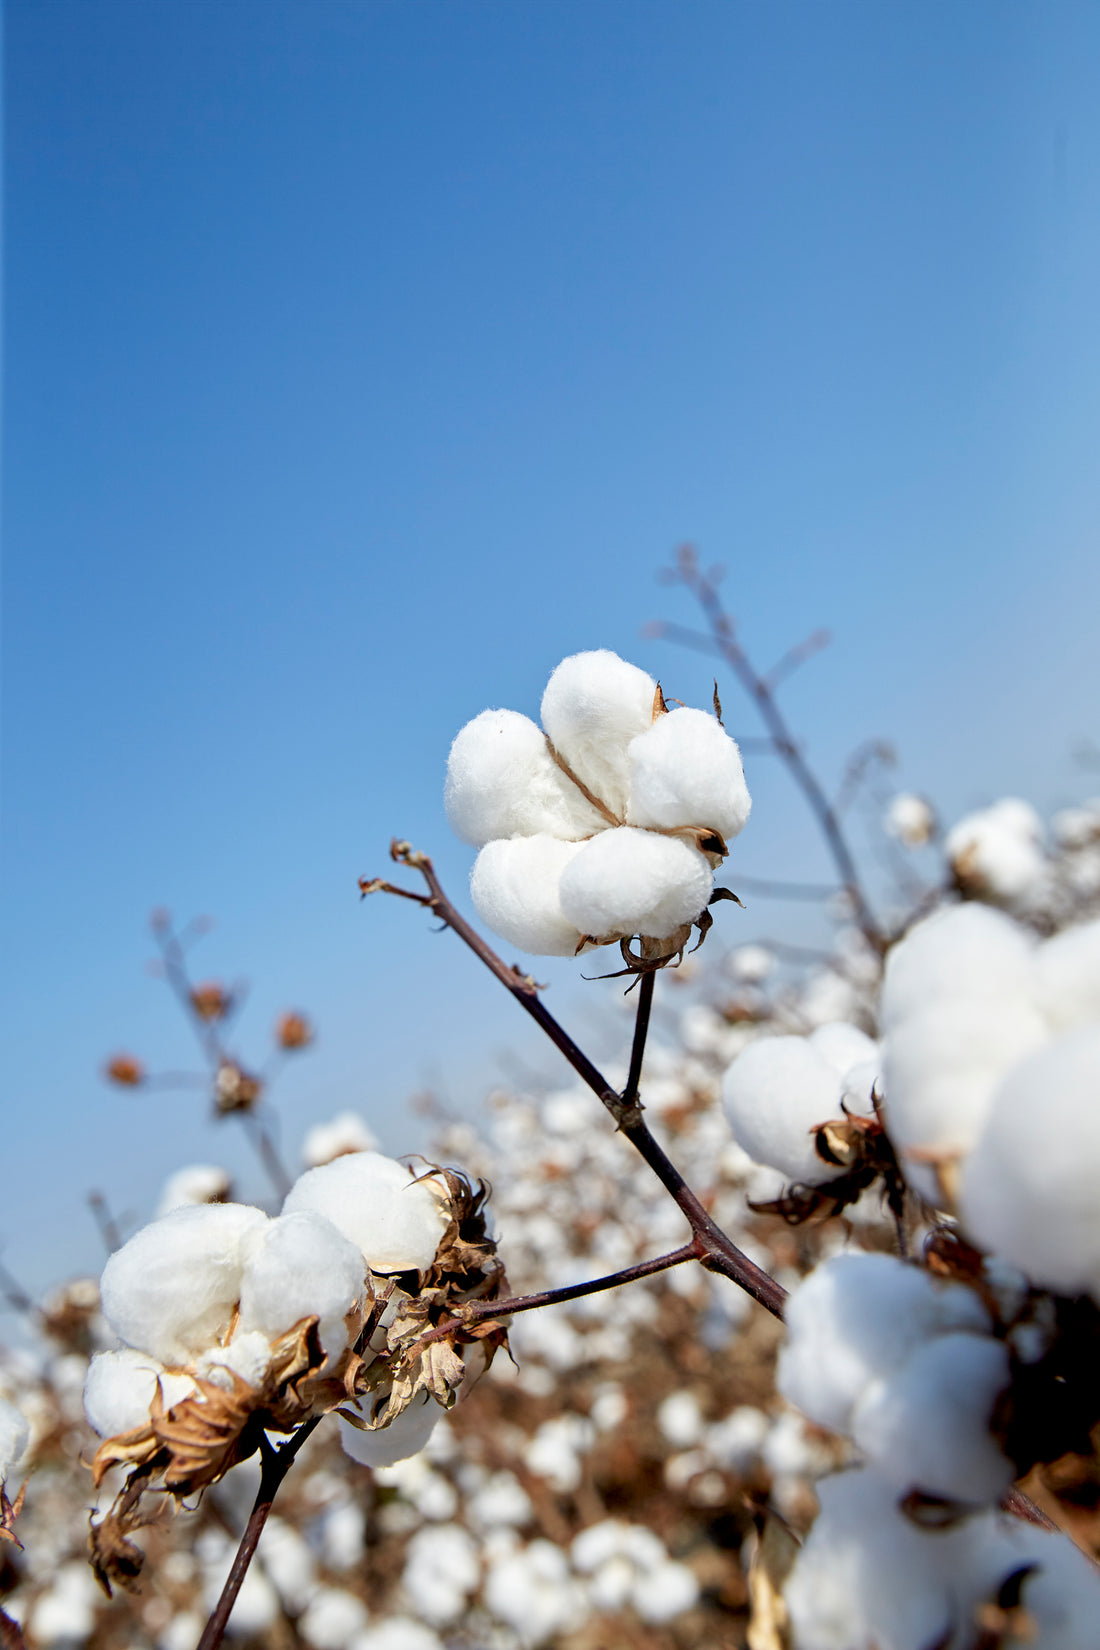 Organically Grown American Cotton